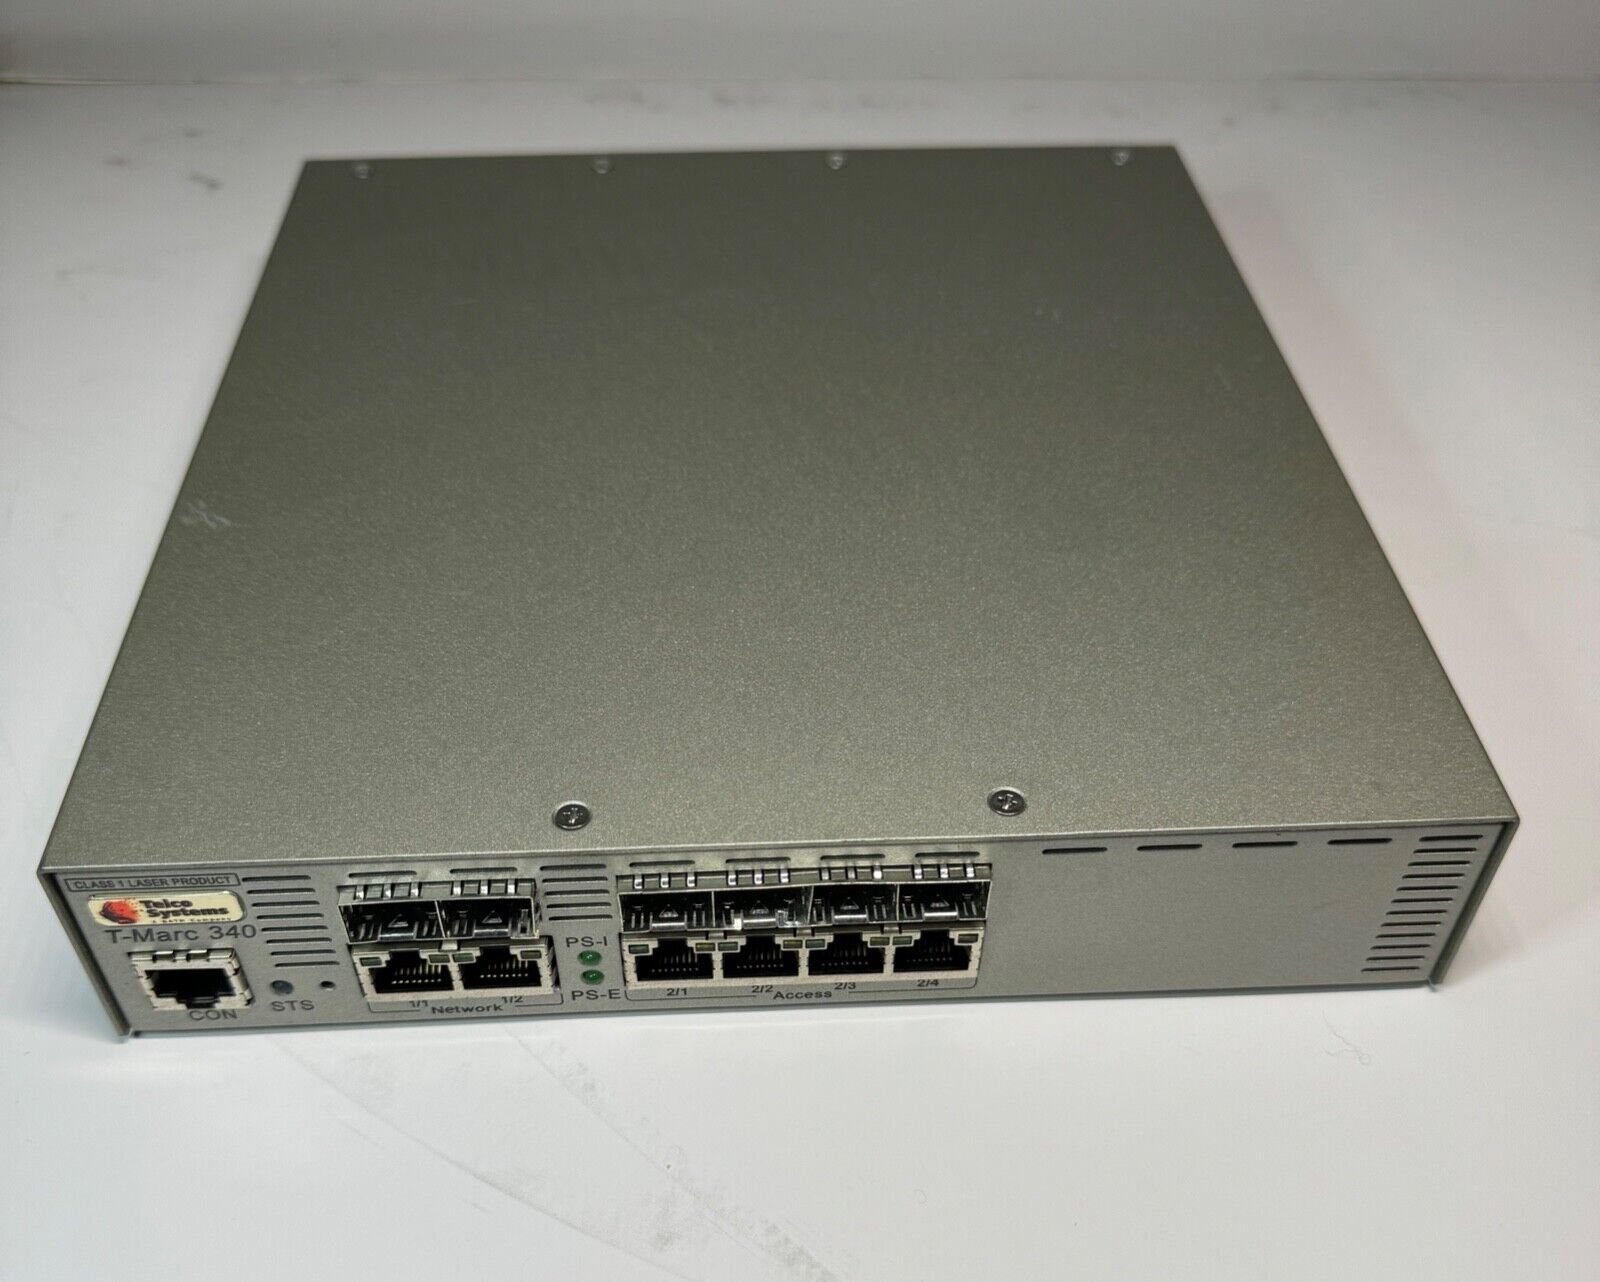 Telco Systems T-Marc 340 TMC-340 Ethernet Demarcation Gateway Switch Module